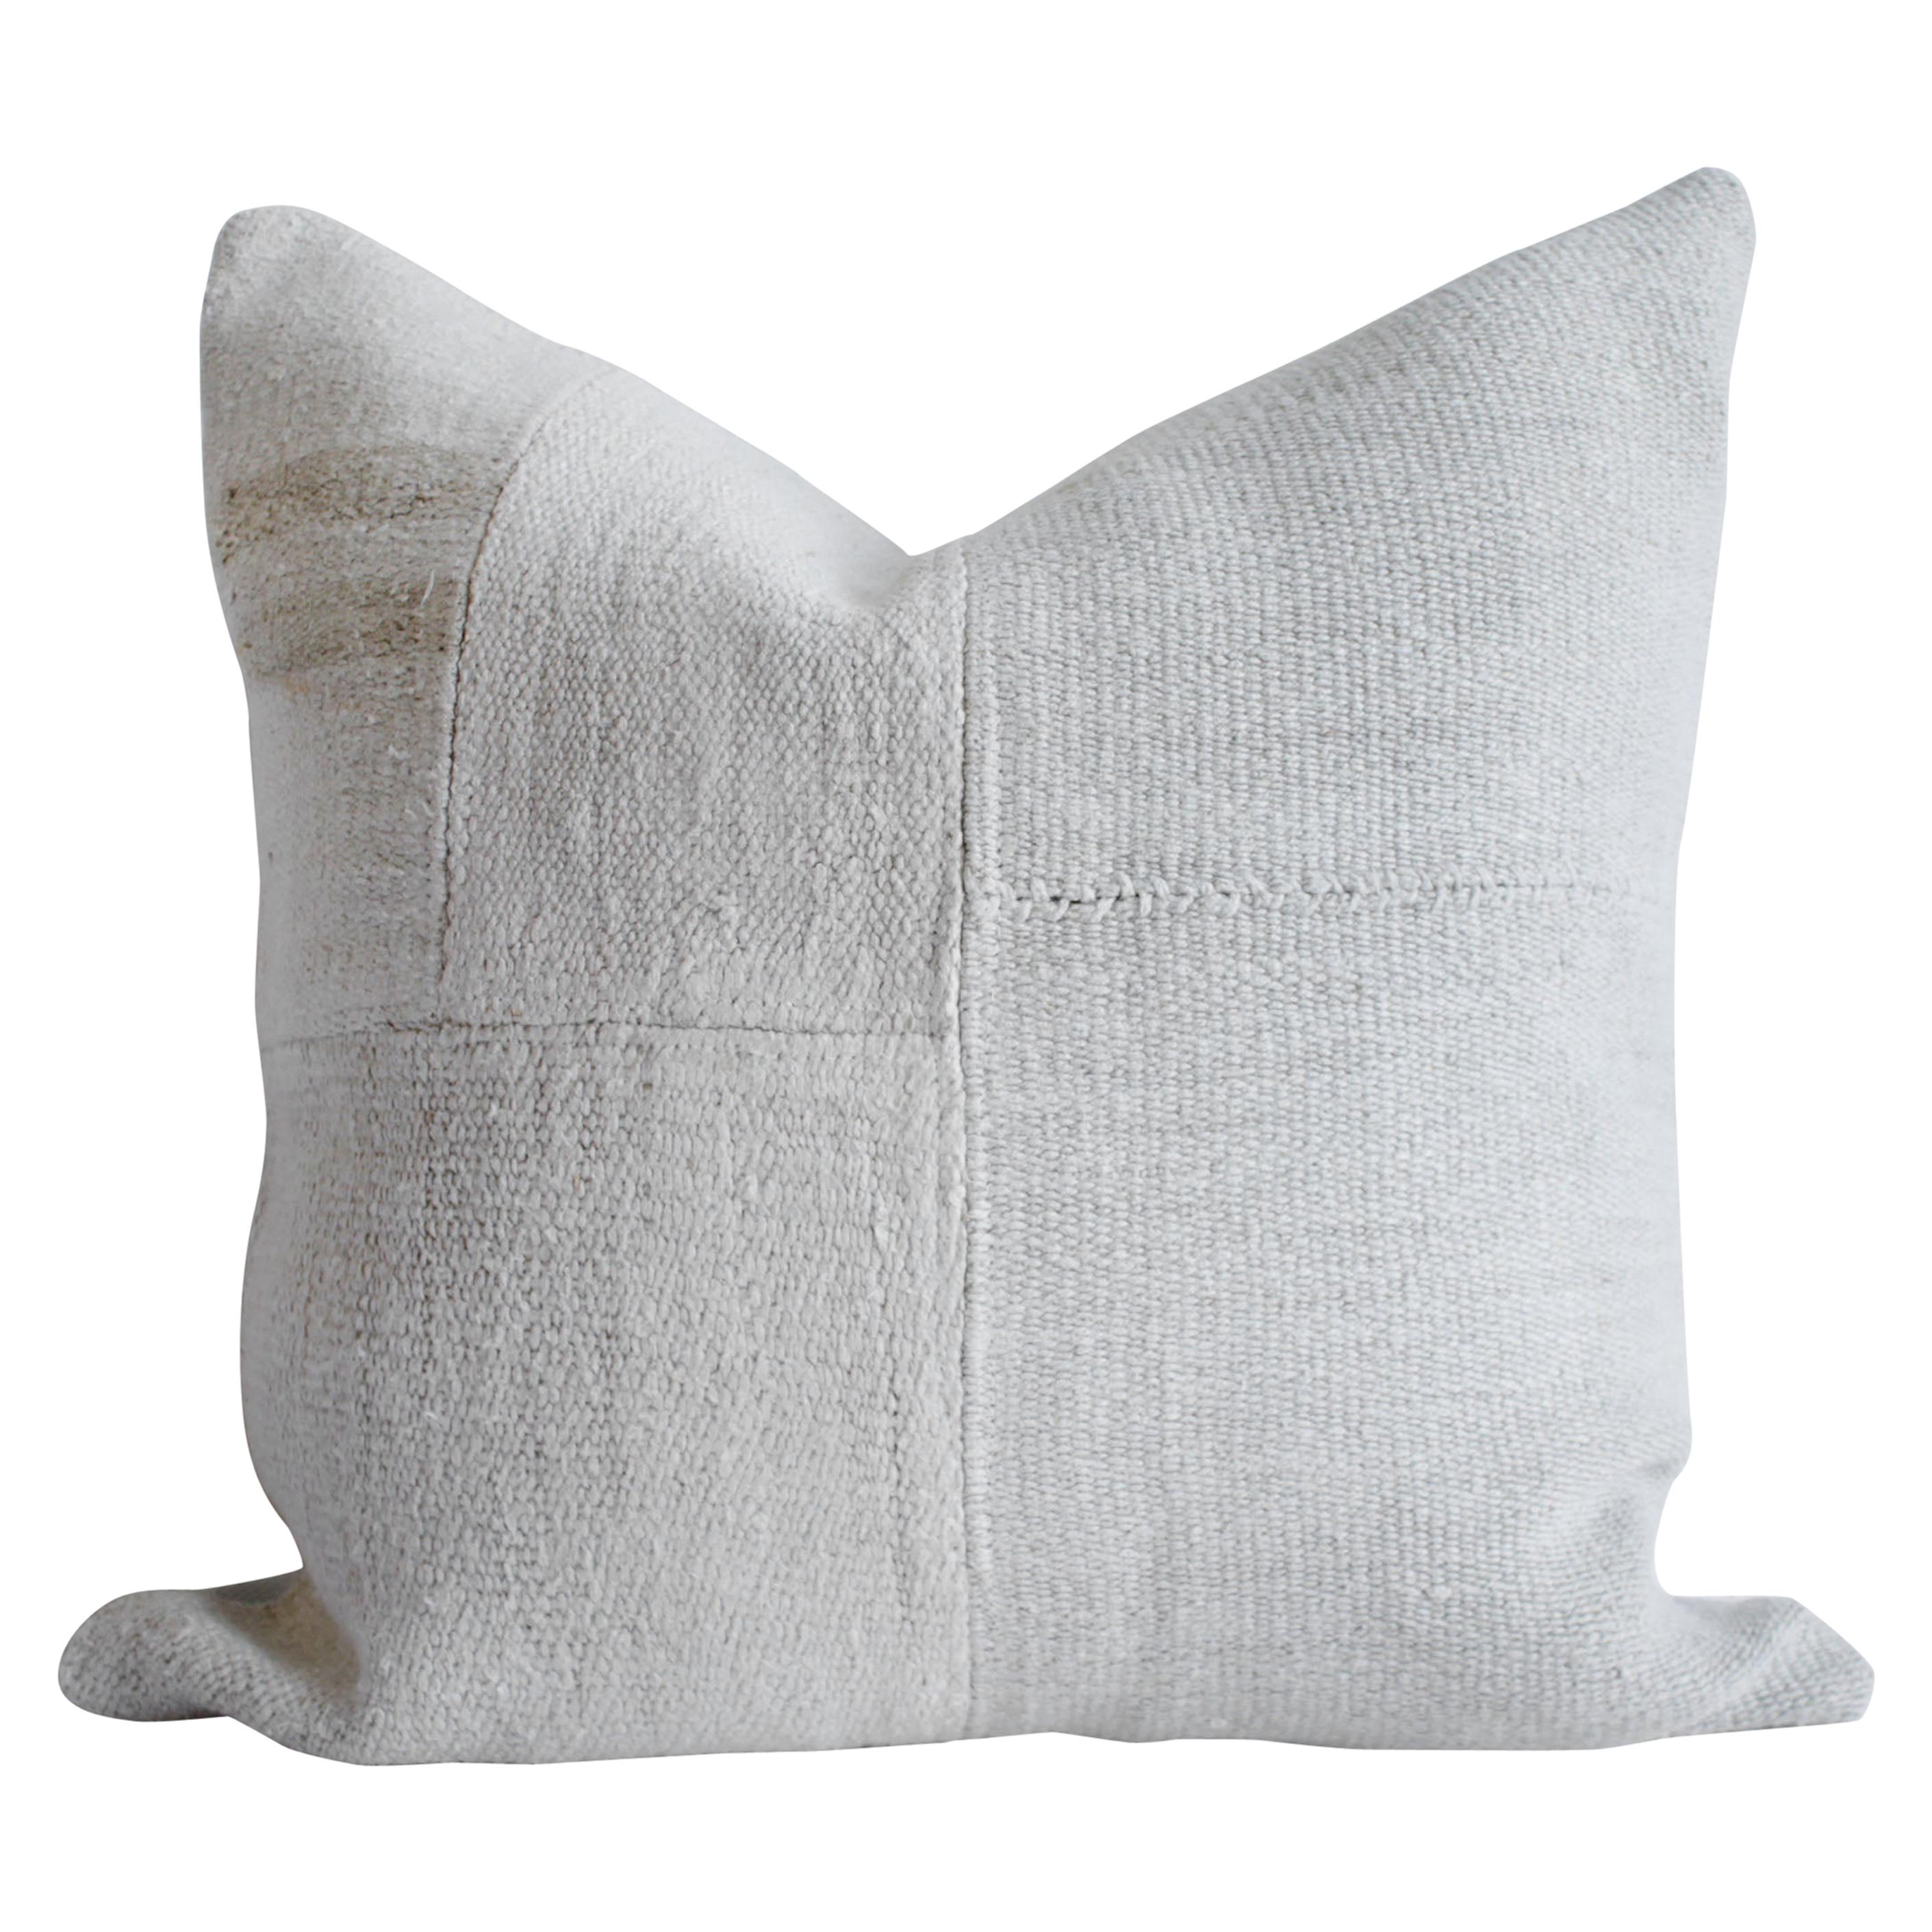 Creamy White Turkish Hemp Rug Pillow with Patchwork Style